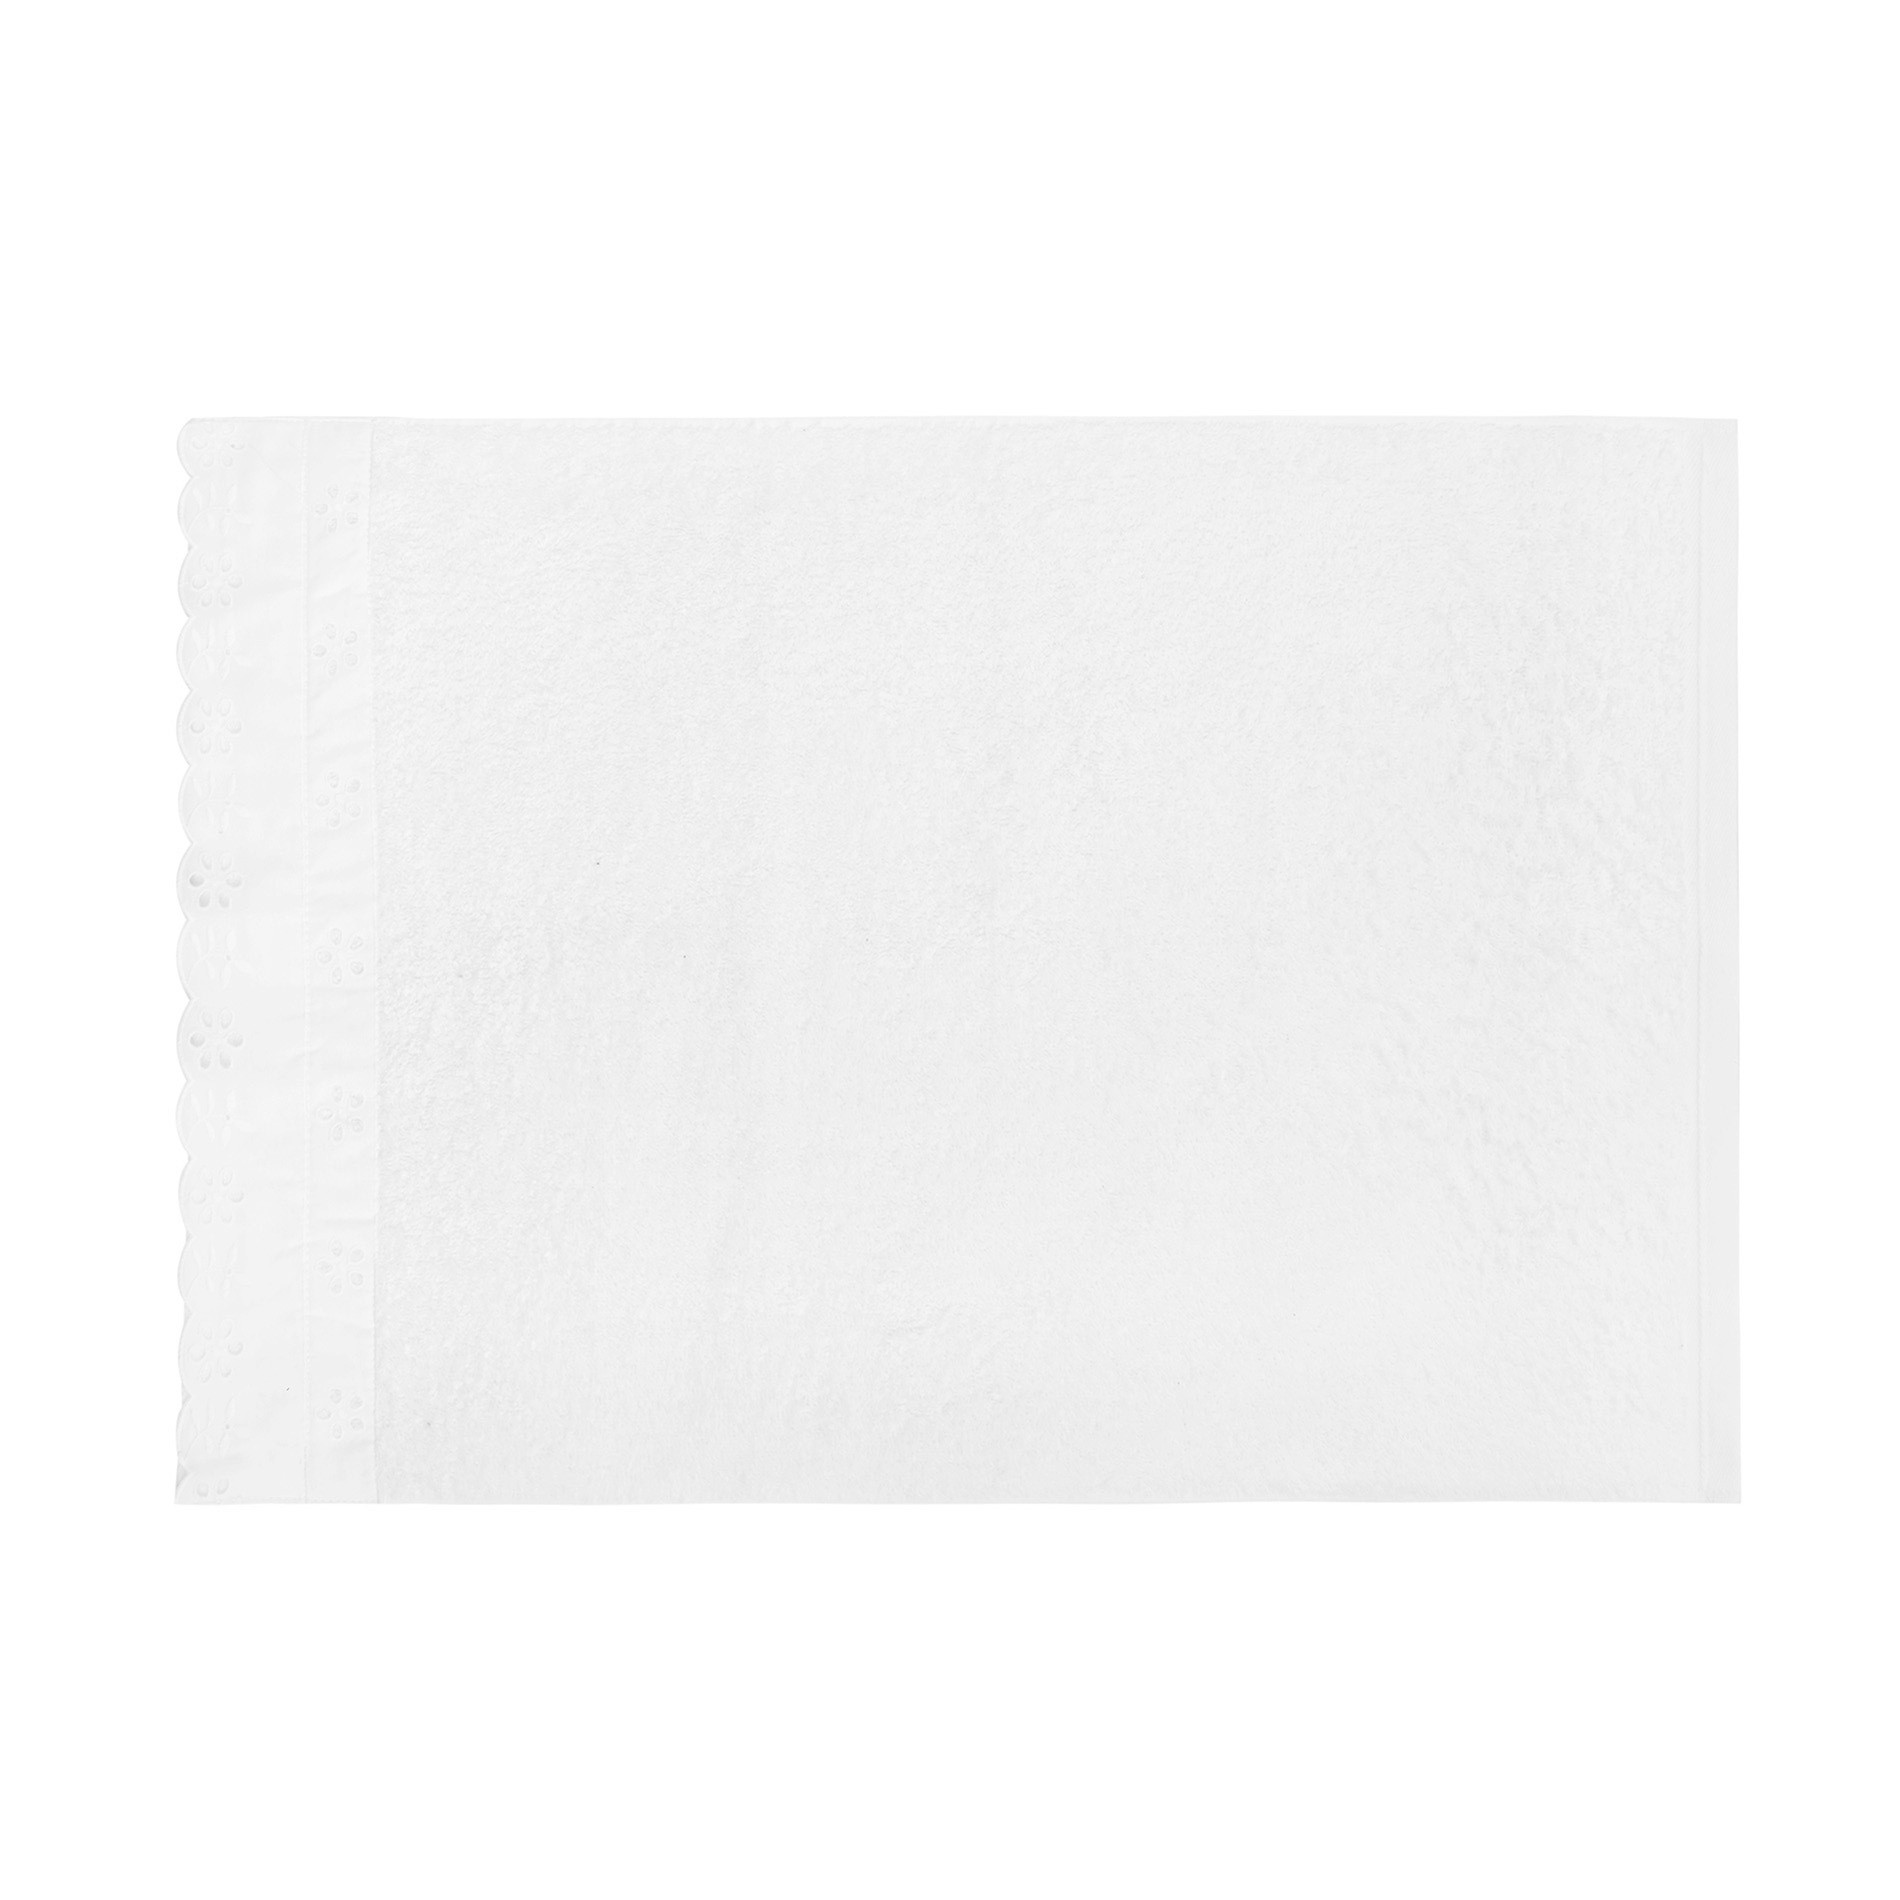 Portofino broderie towel, White, large image number 2